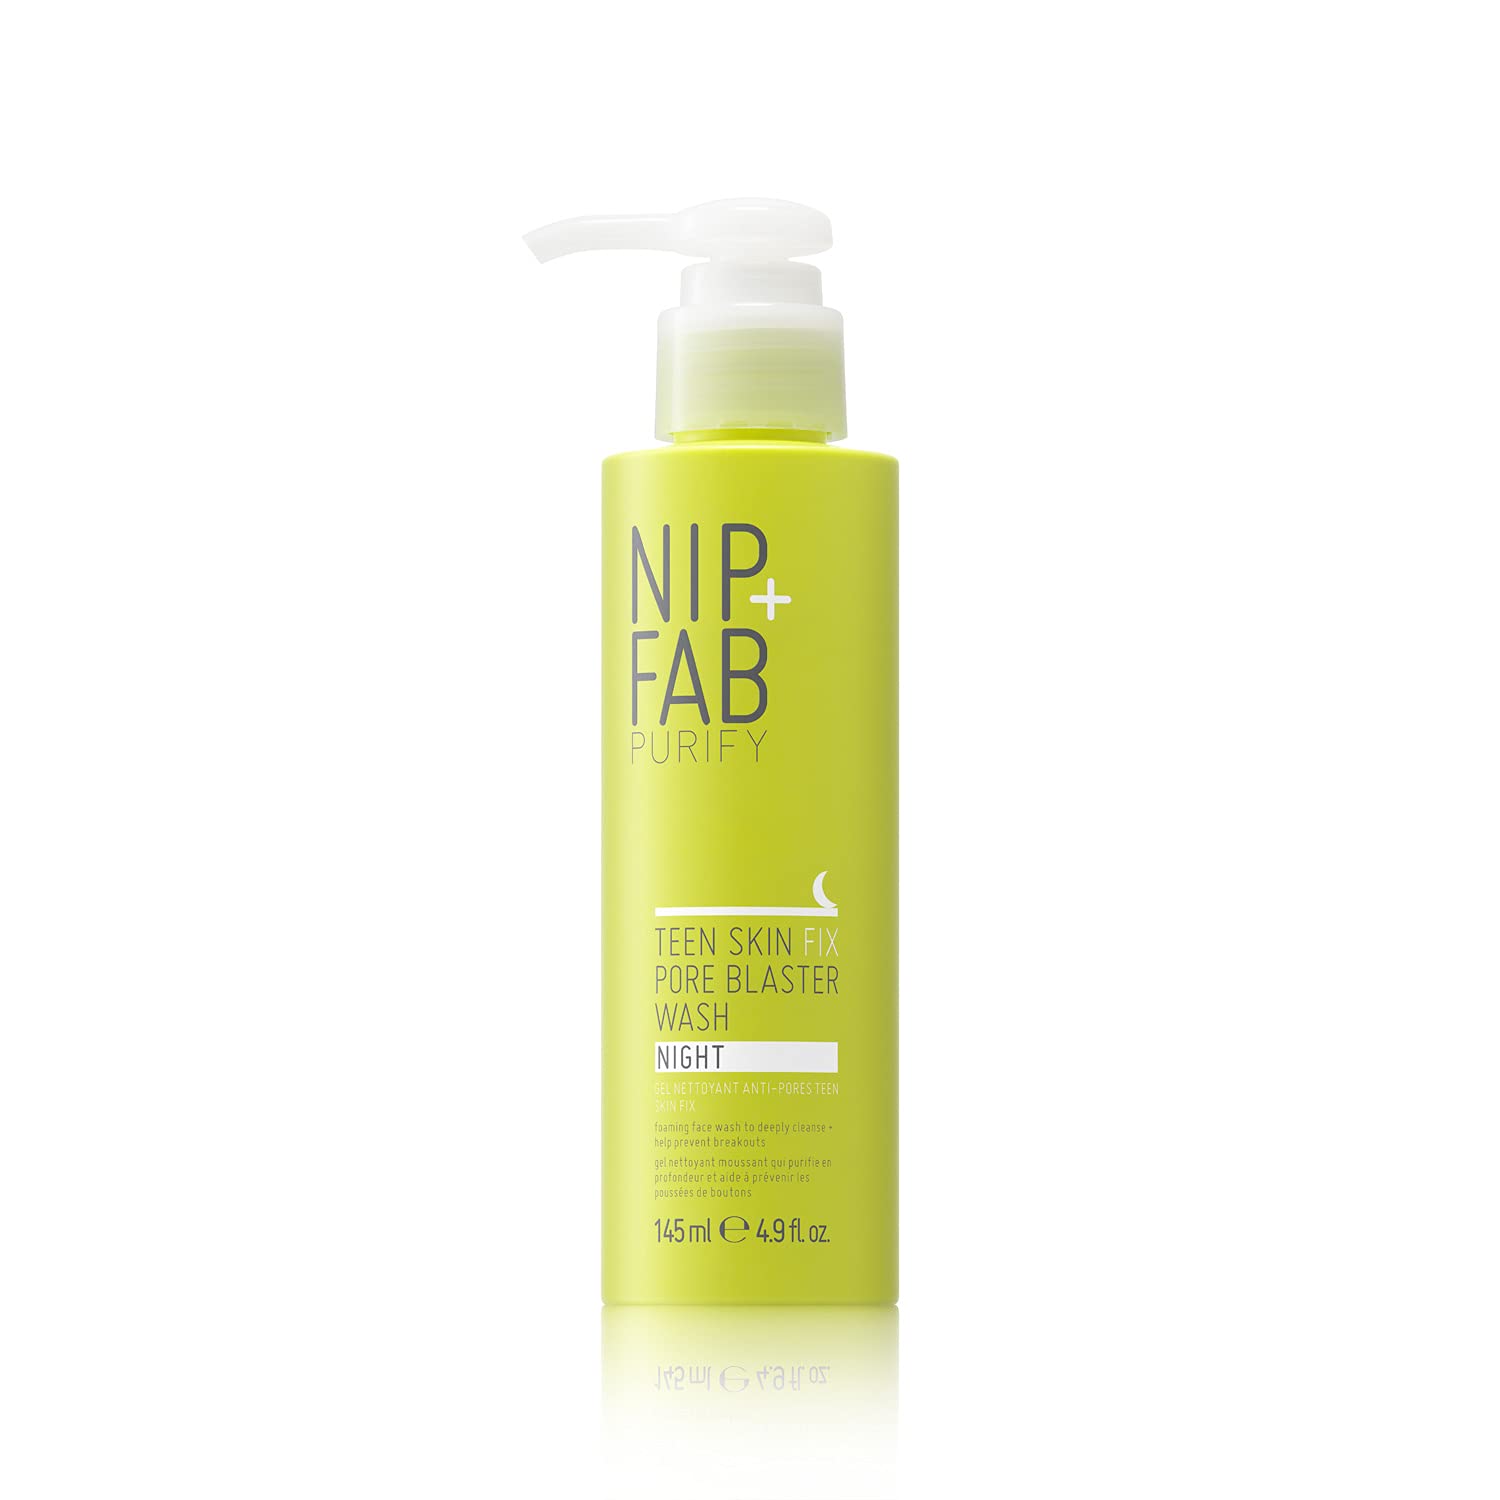 Nip + Fab Teen Skin Fix Pore Blaster Night Face Wash